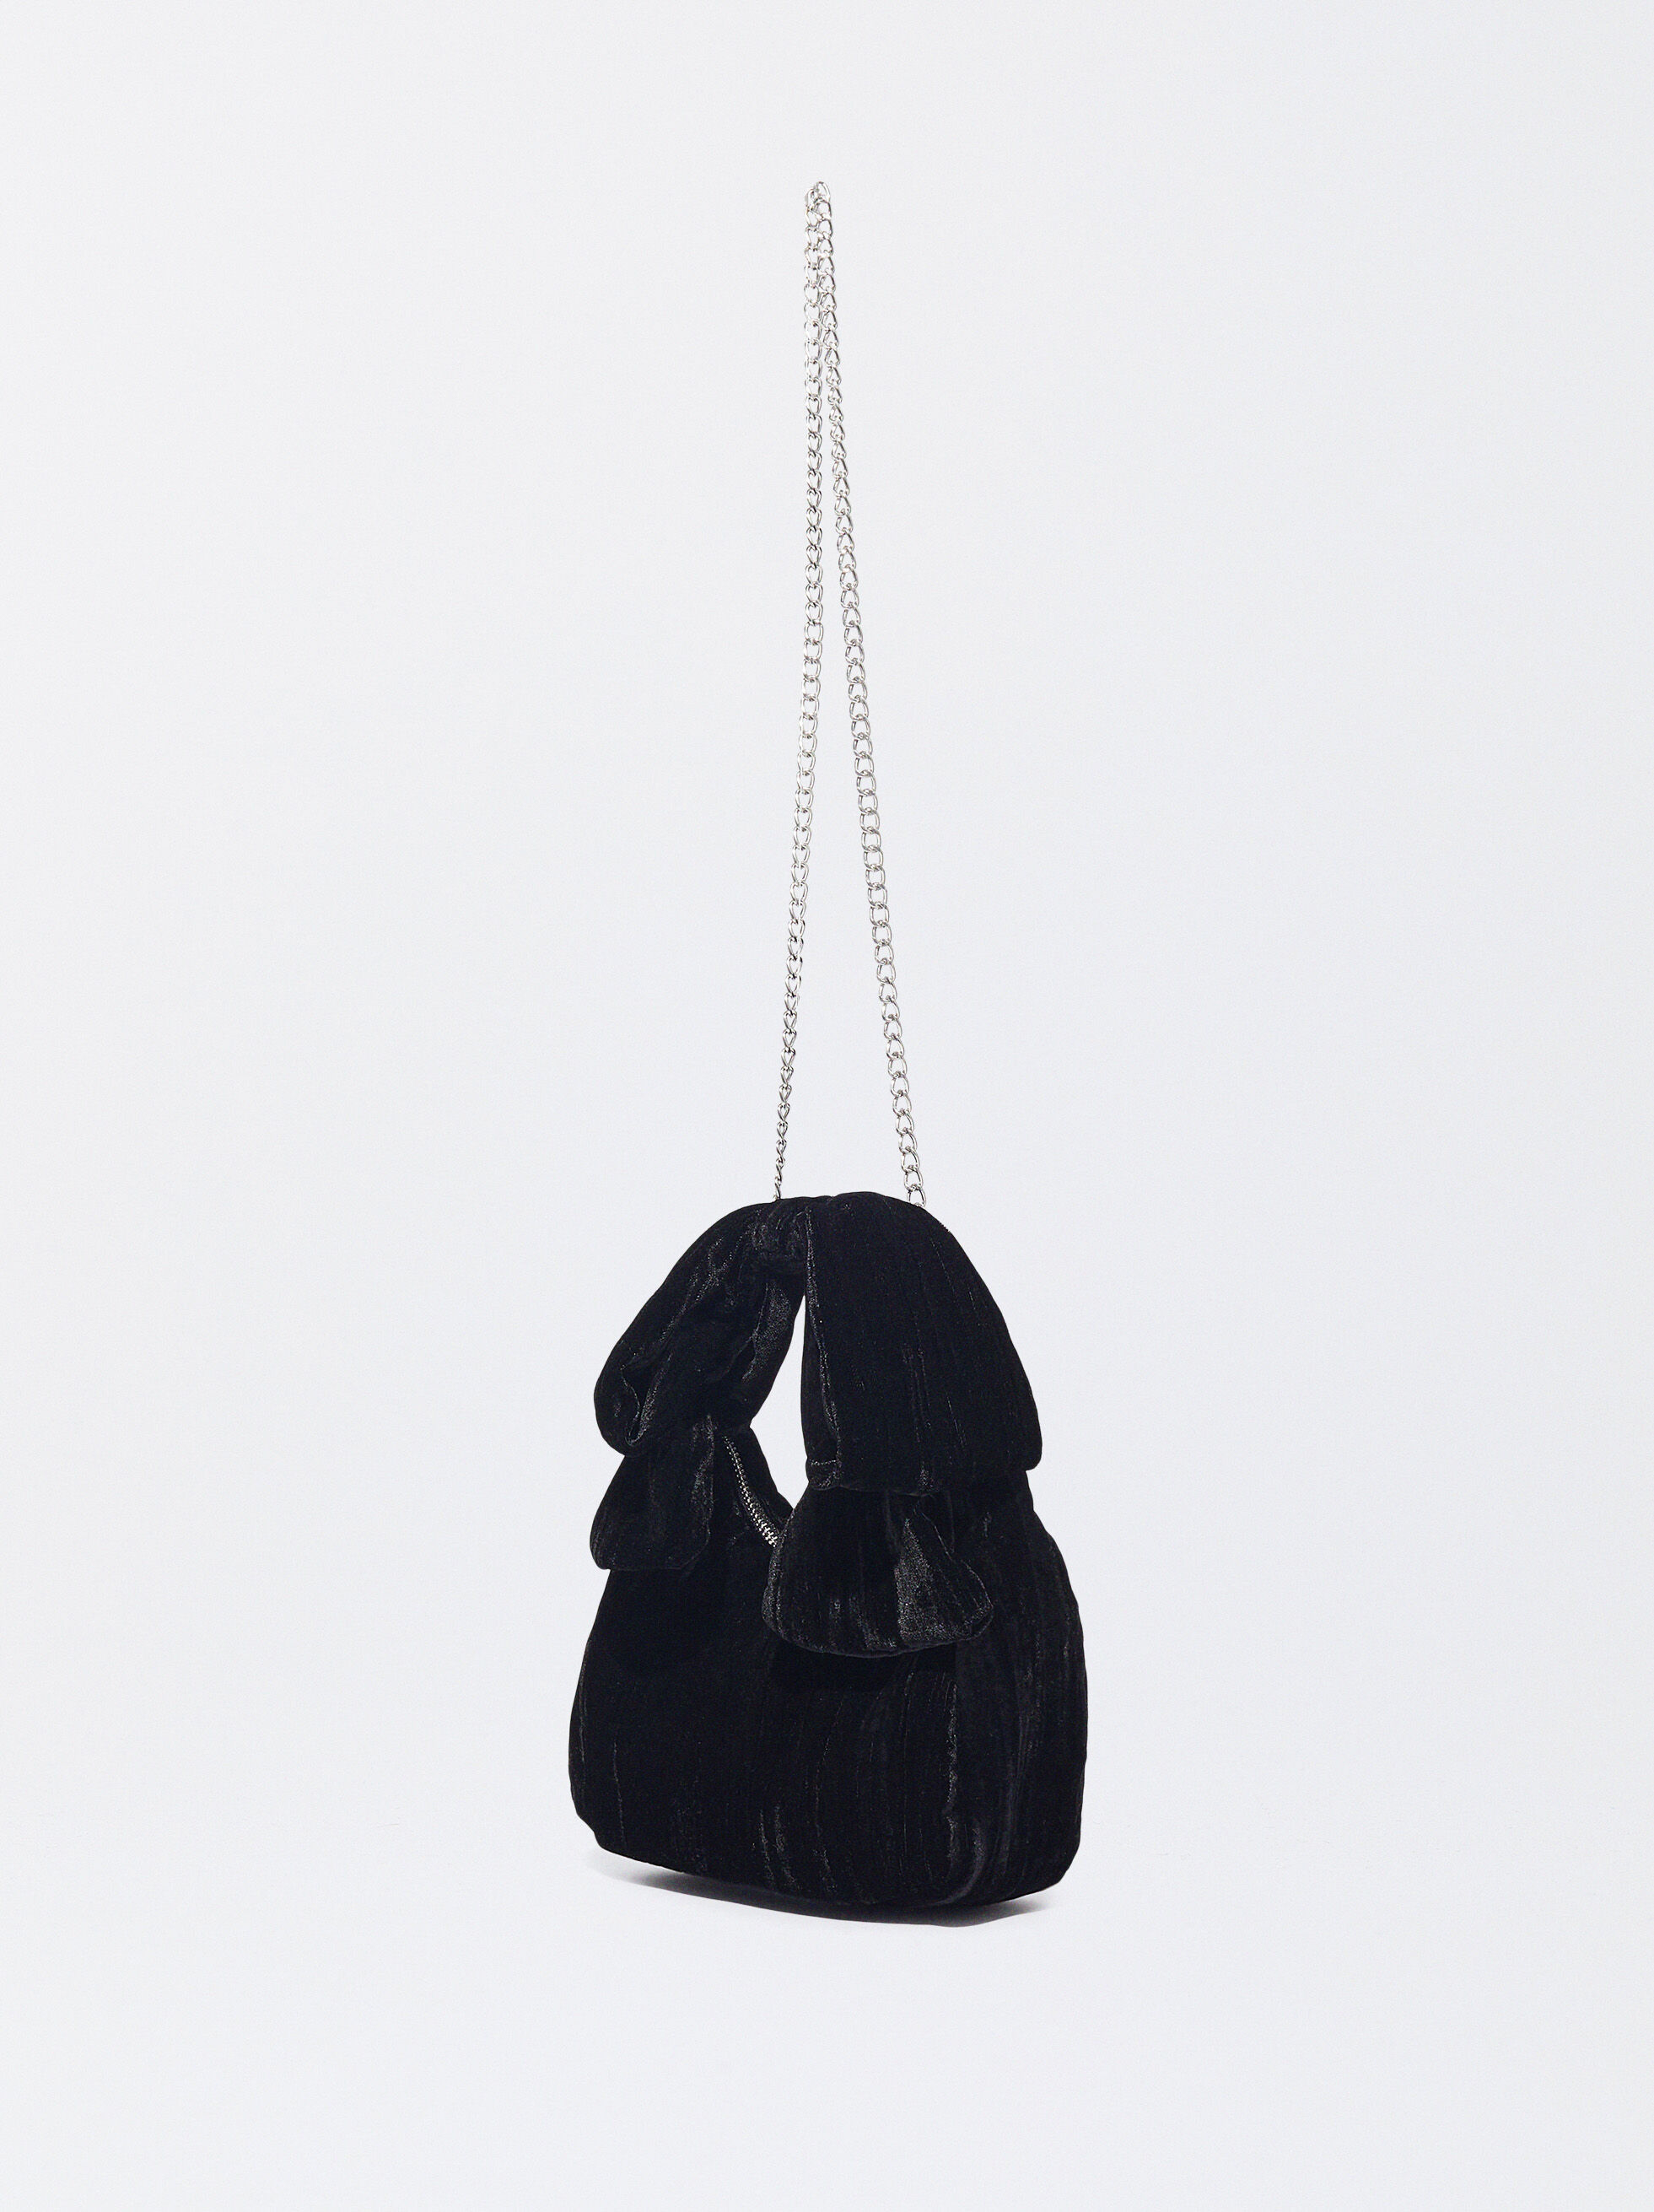 GUCCI GG Marmont Mini Velvet Shoulder Bag in Red | COCOON